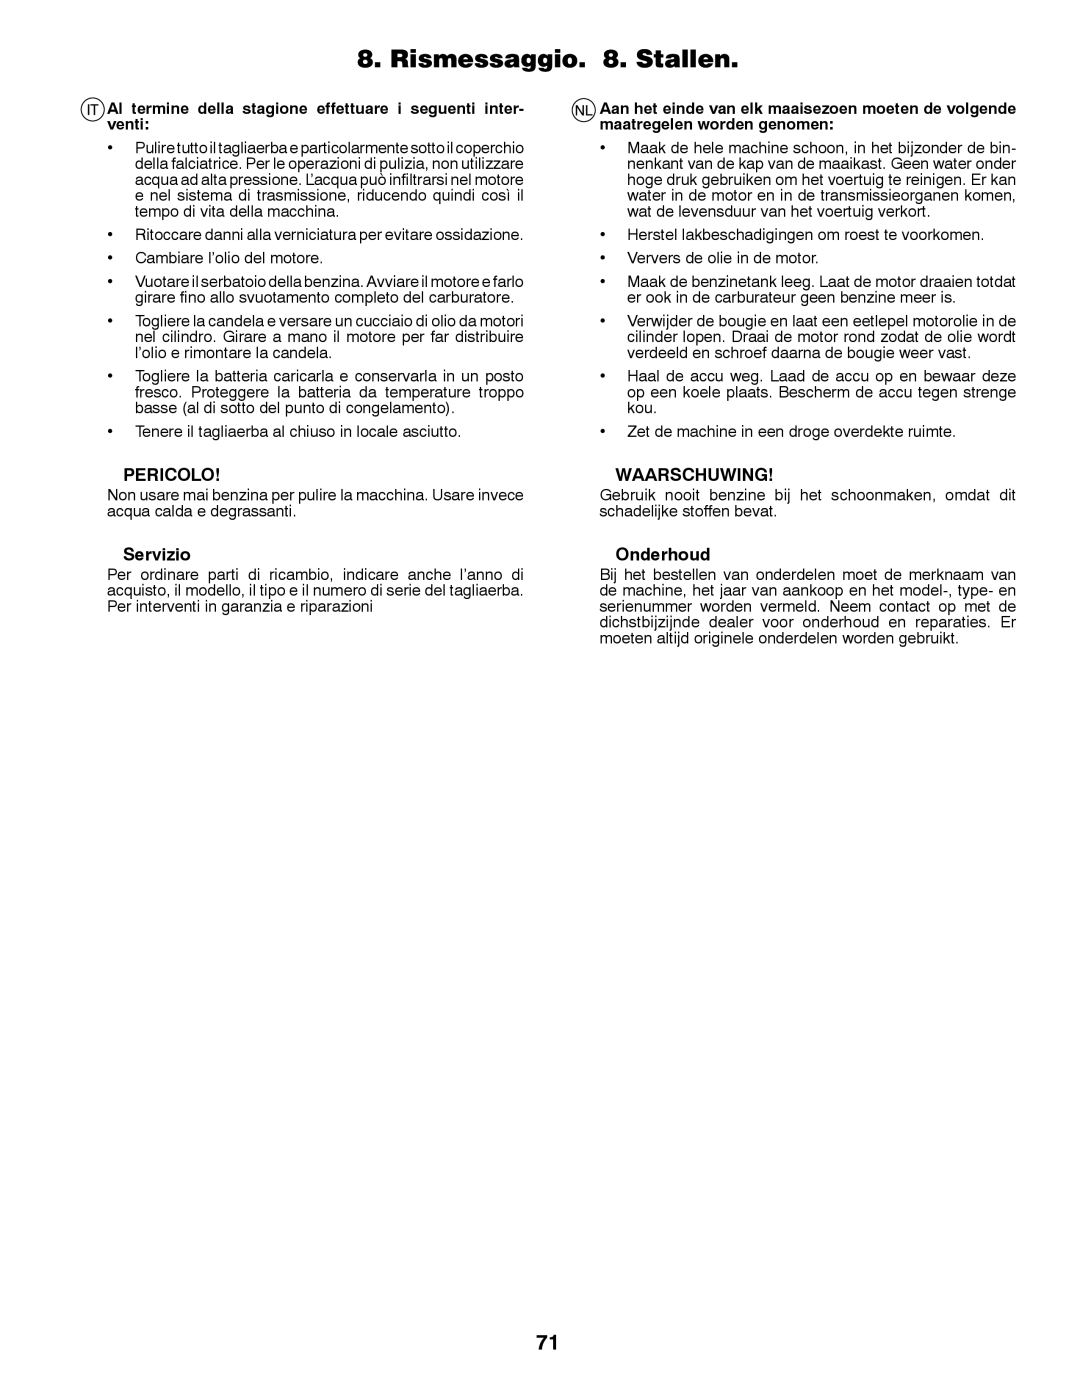 Husqvarna LT126 instruction manual Rismessaggio. 8. Stallen, Pericolo, Servizio, Waarschuwing, Onderhoud 